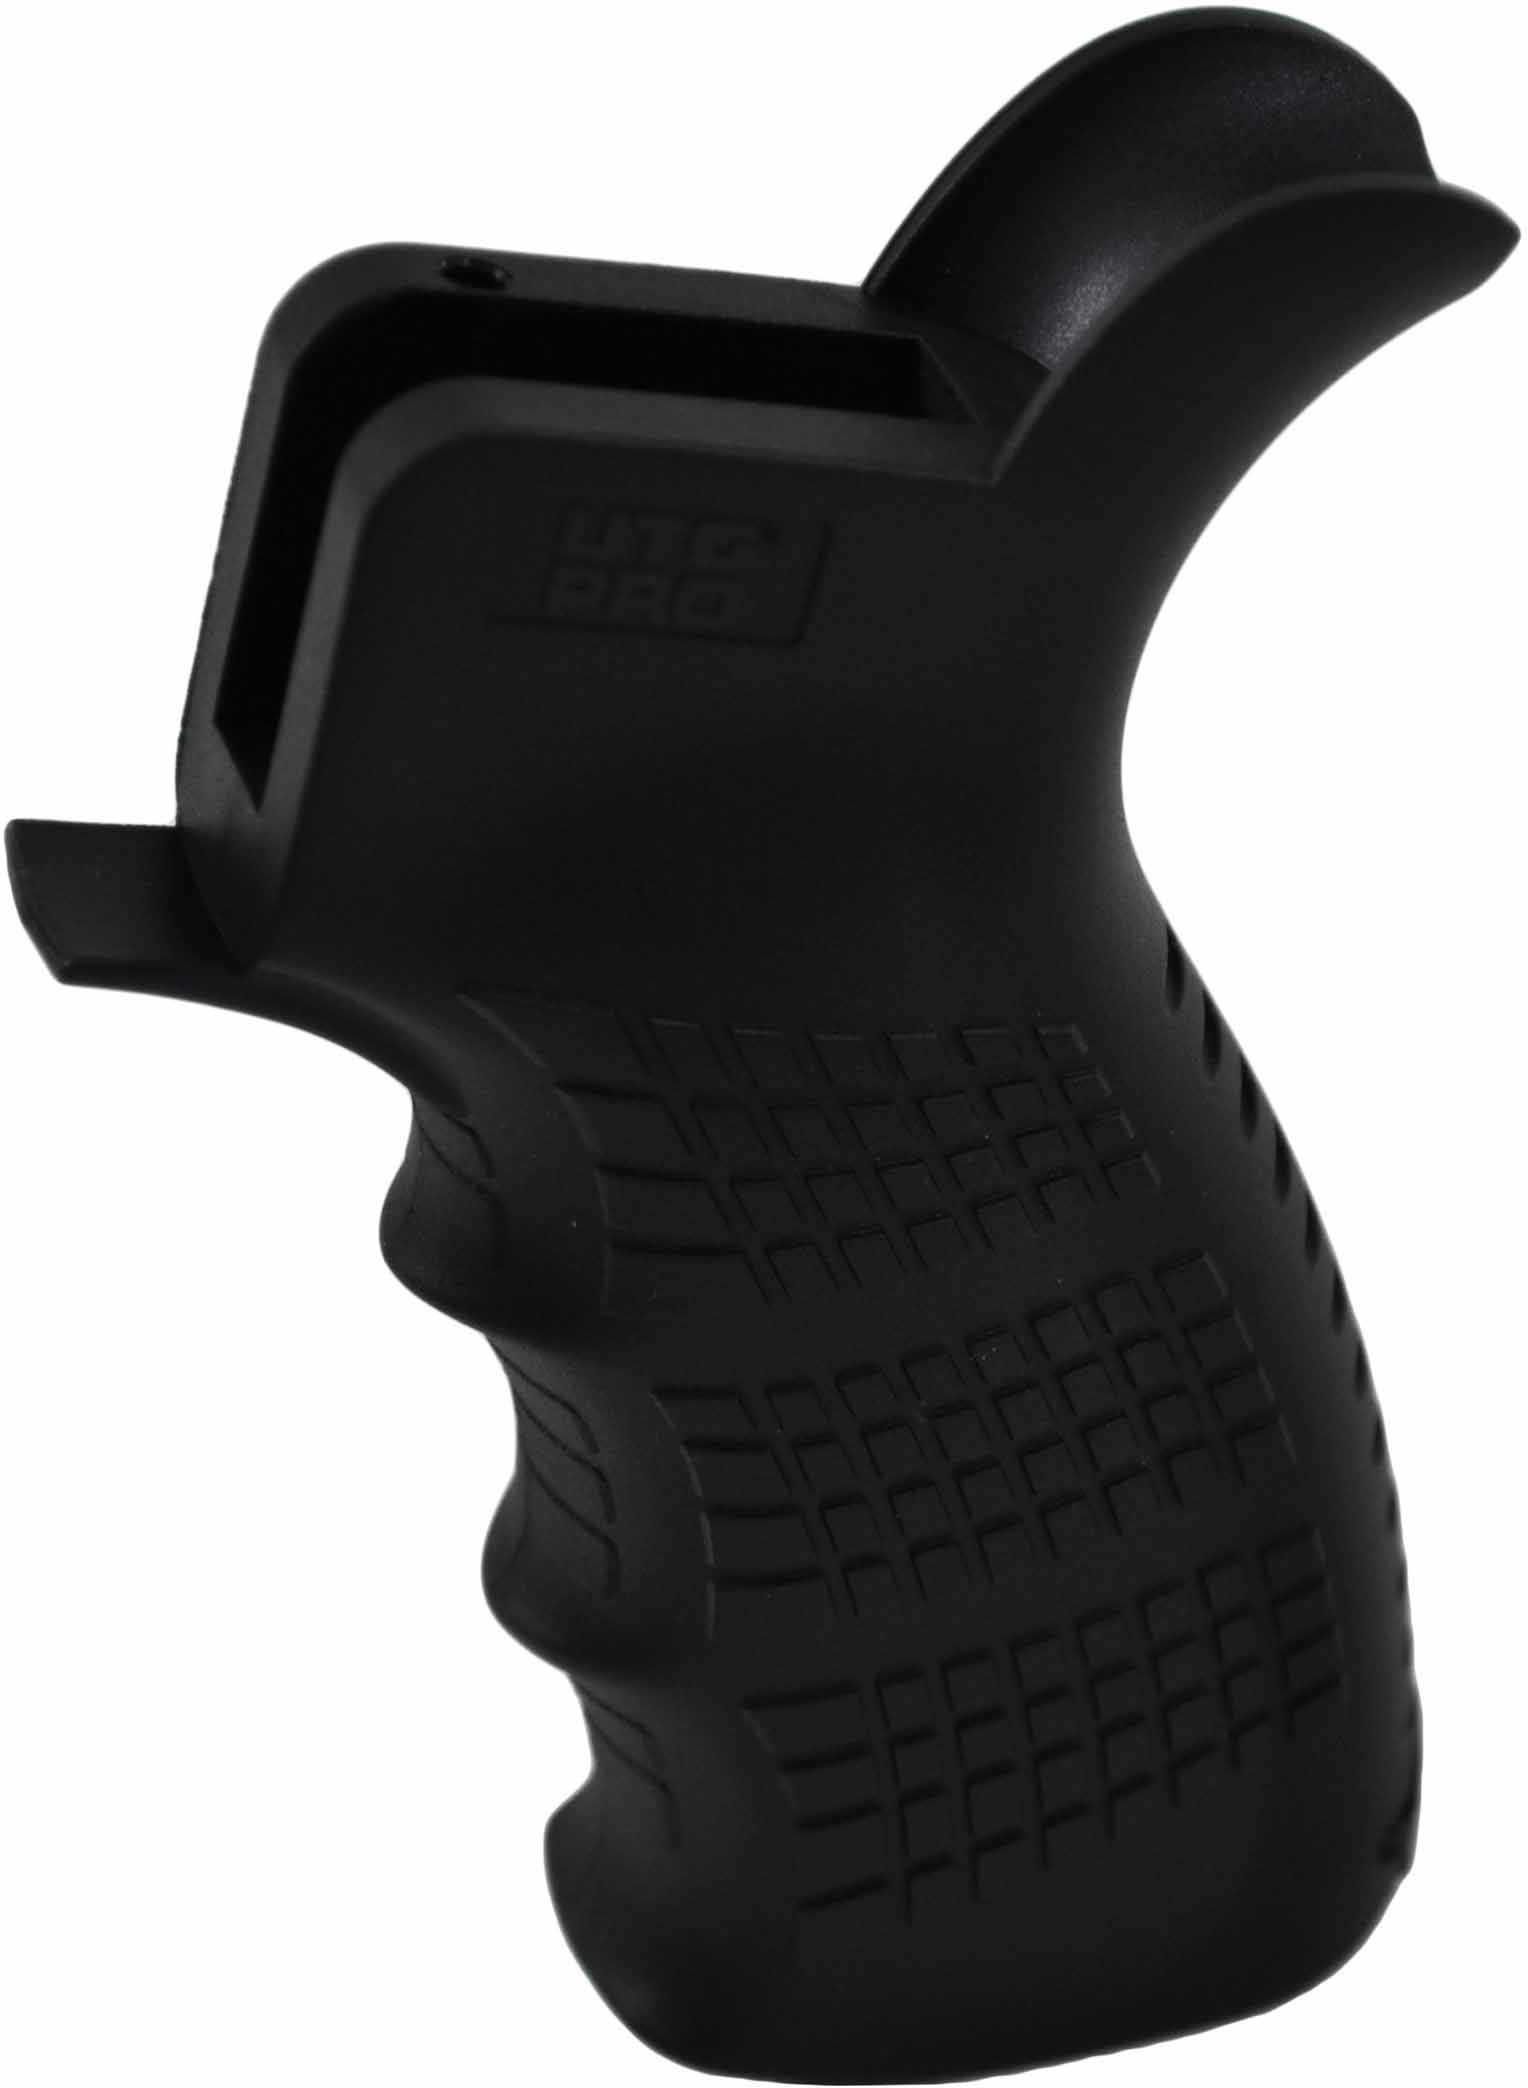 Leapers AR15 Ambidextrous Pistol Grip, Black Md: RBUPG01B